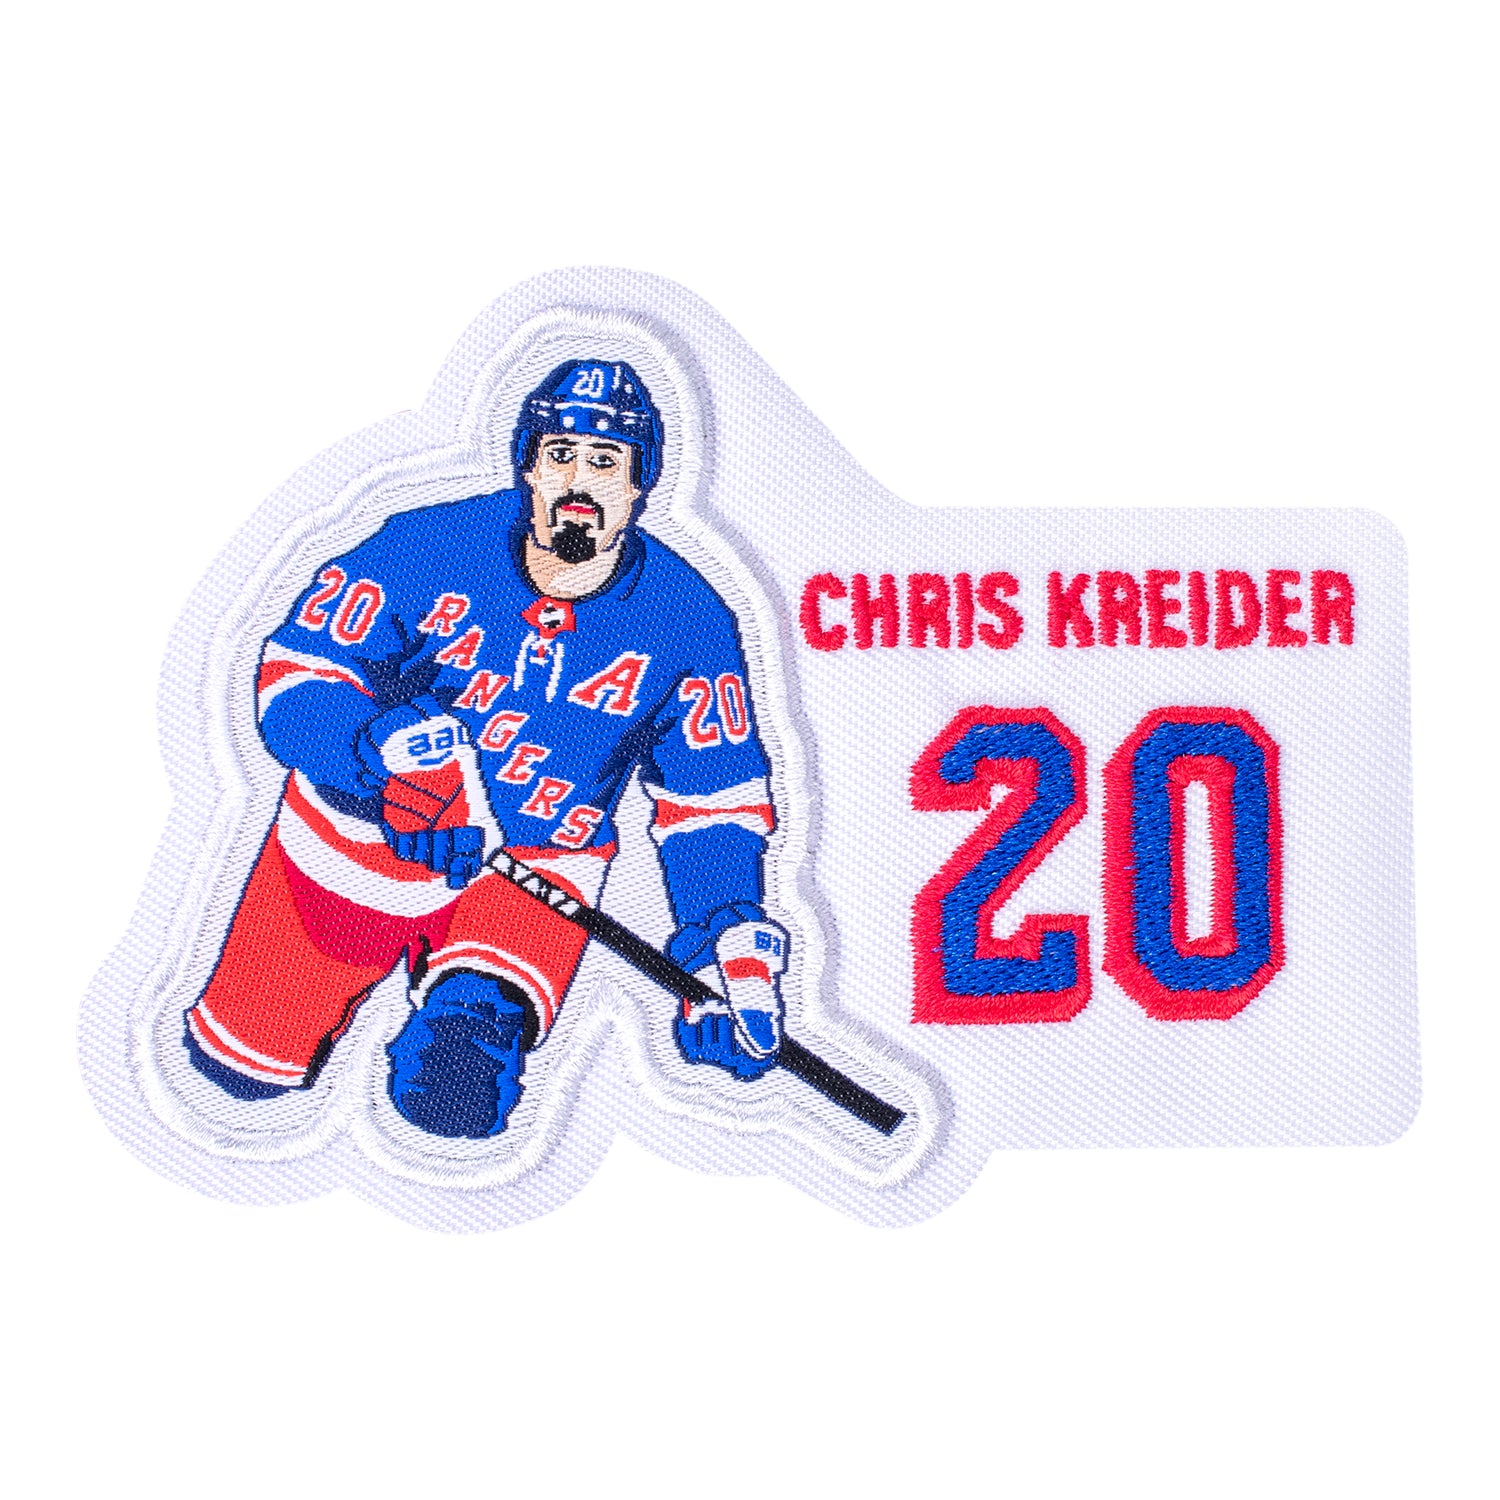 Chris Kreider New York Rangers Signed Autographed Home Jersey Number